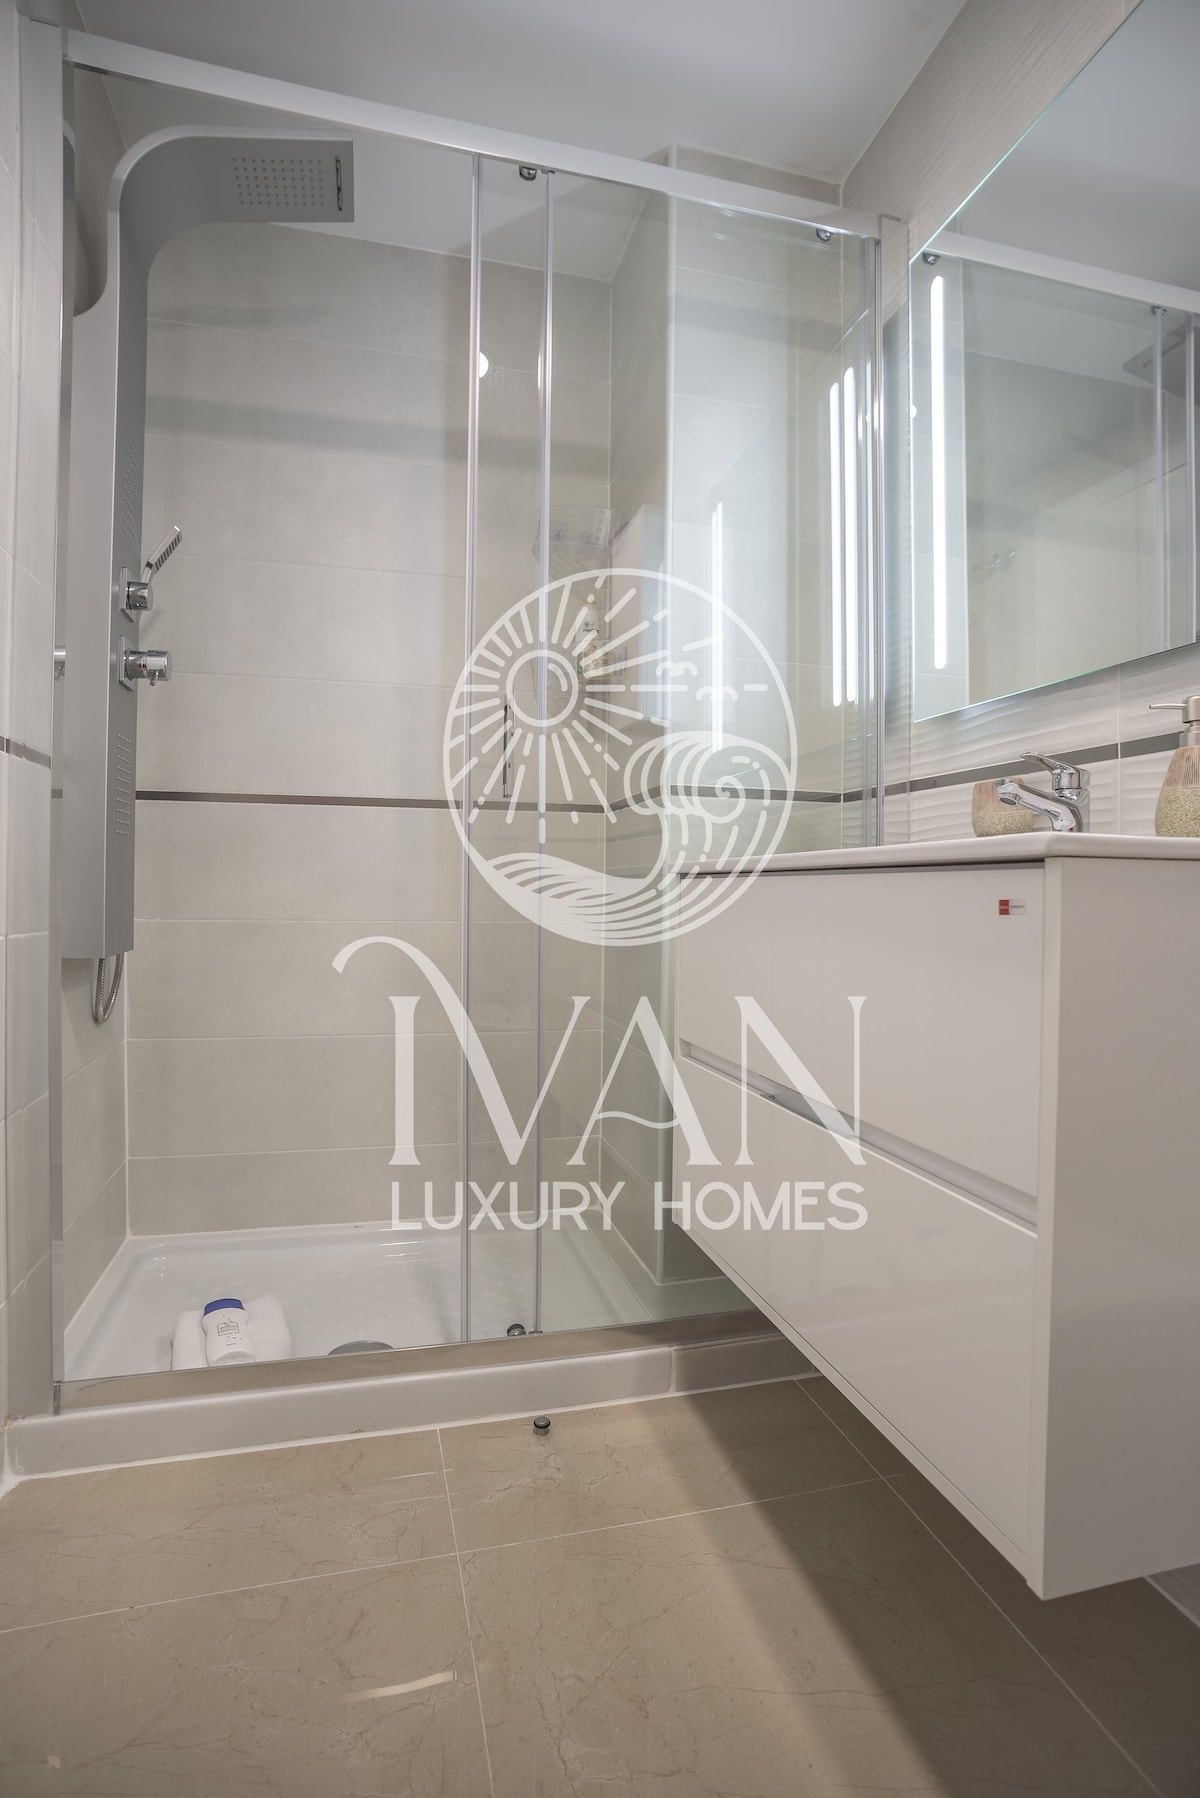 Casa Natura-Ivan Luxury Homes 8ªPta Frontal1ªLinea